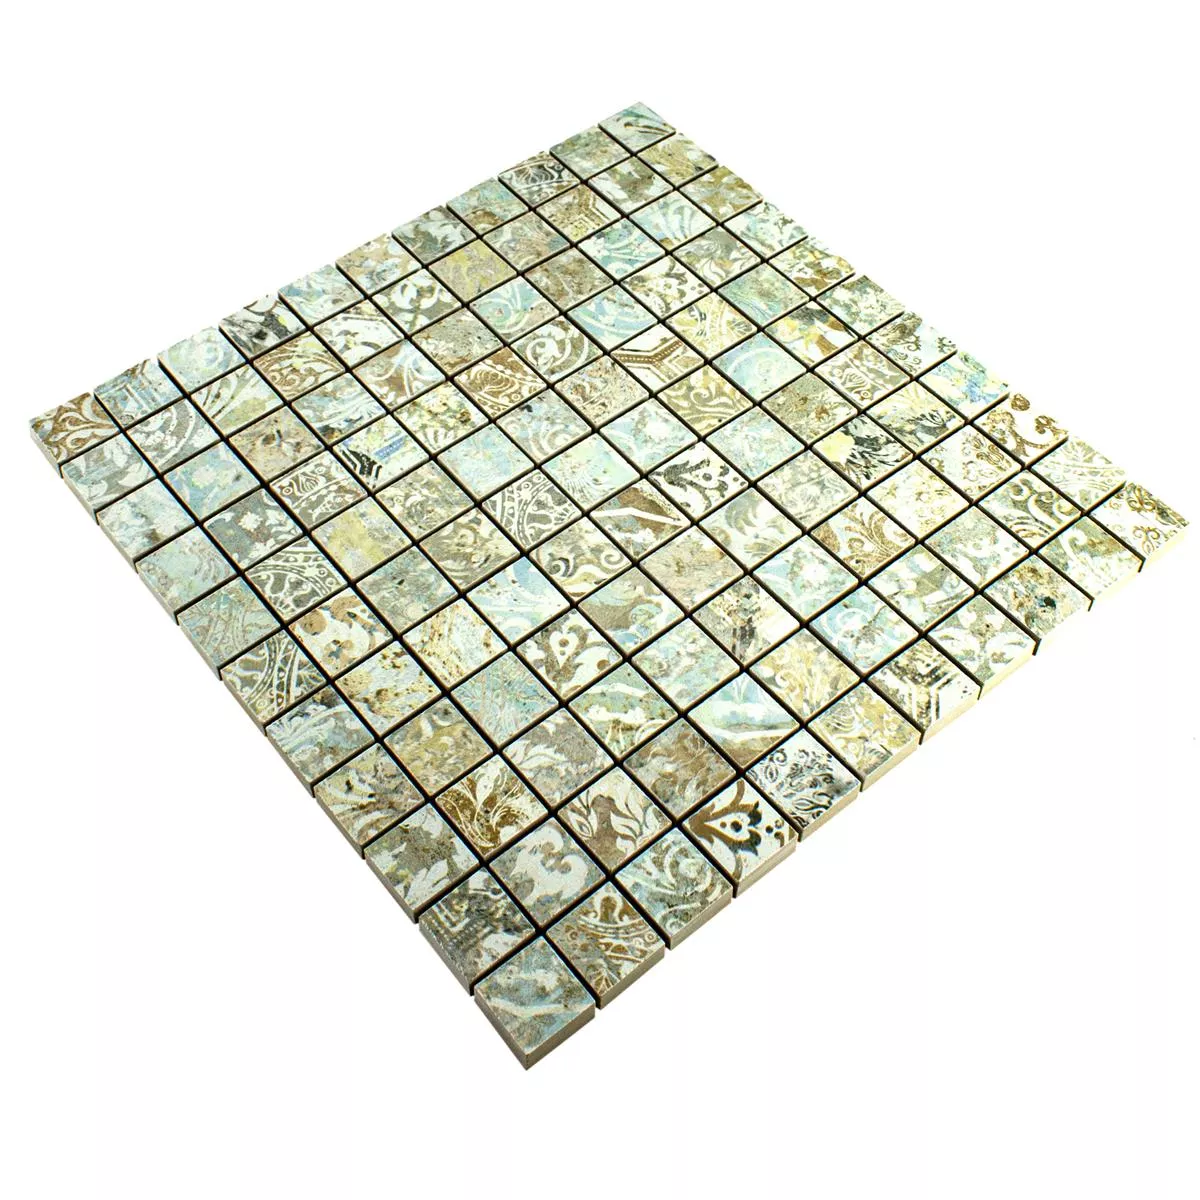 Ceramic Mosaic Tiles Bellona Effect Light Colored 25x25mm